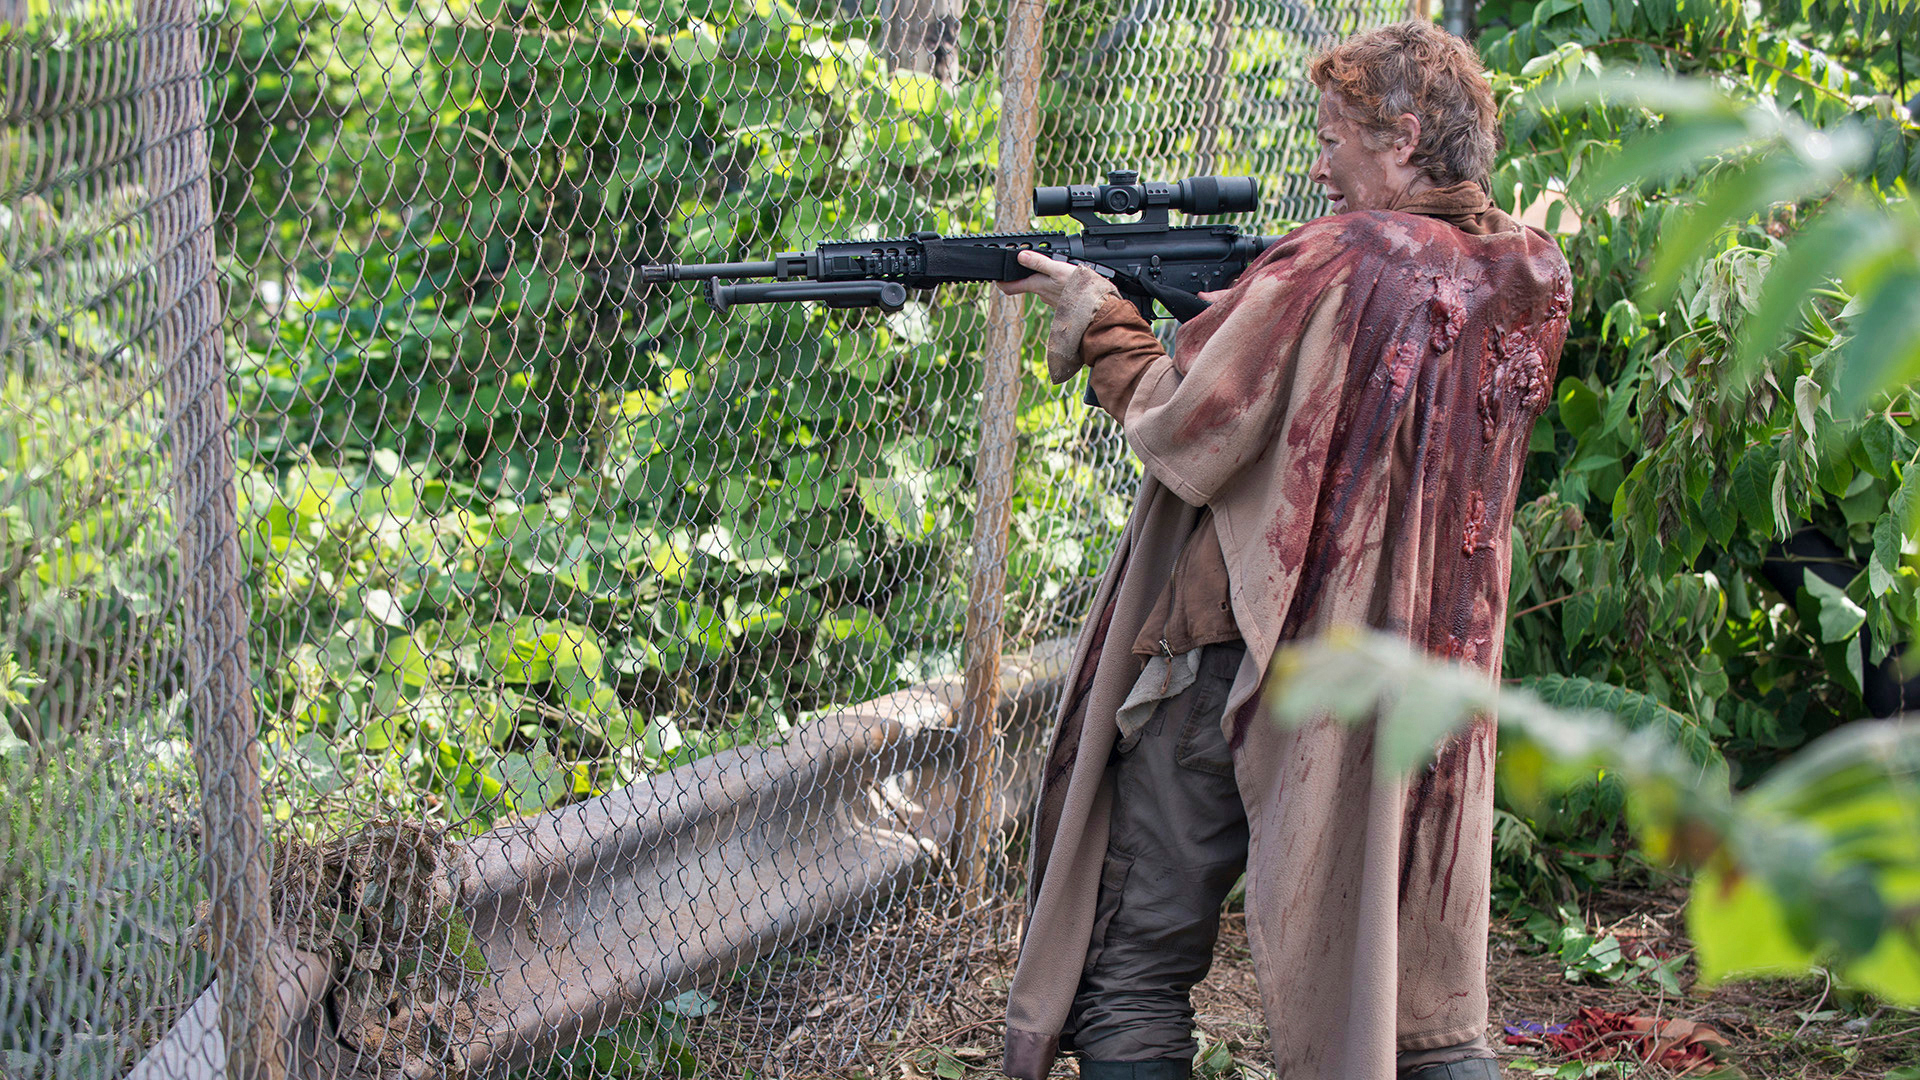 The Walking Dead: Best of Carol Season 1 Episode 4 - No Sanctuary: Best of Carol Edition